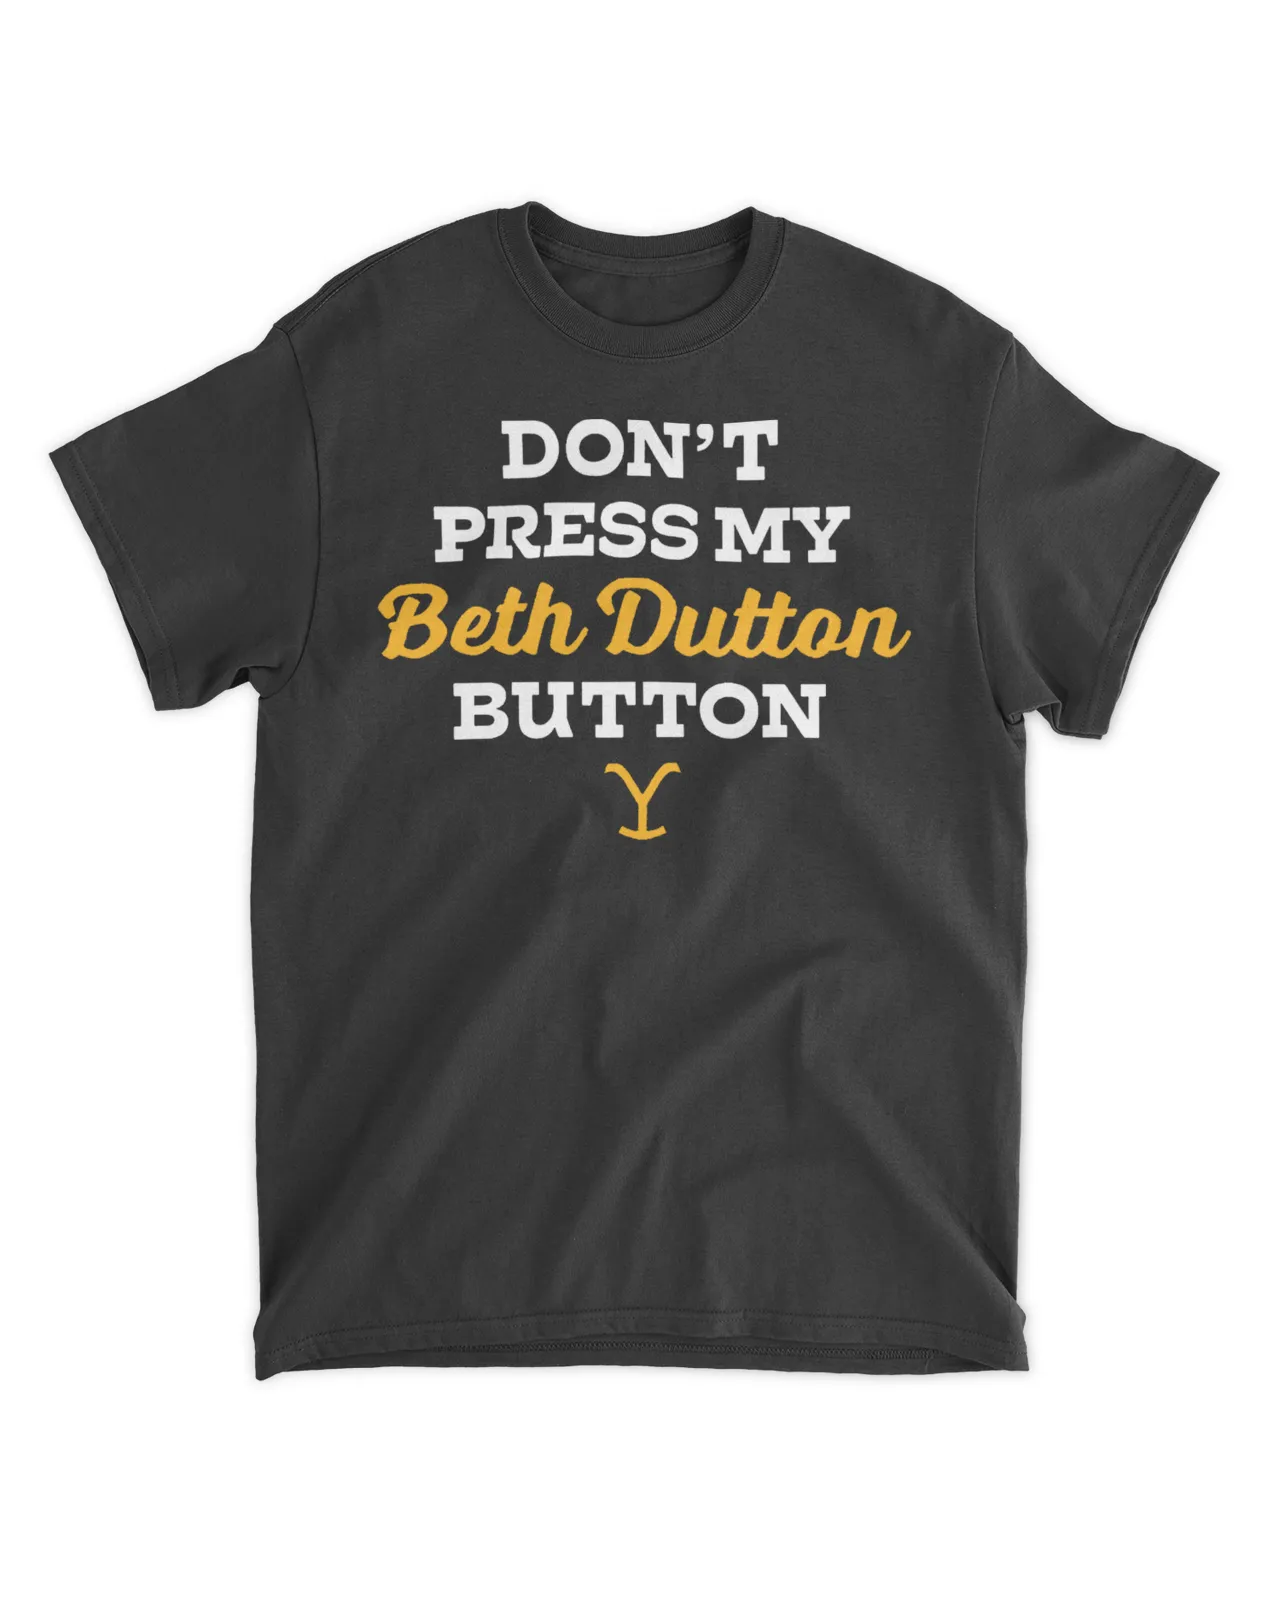  Don't press my Beth Dutton button shirt